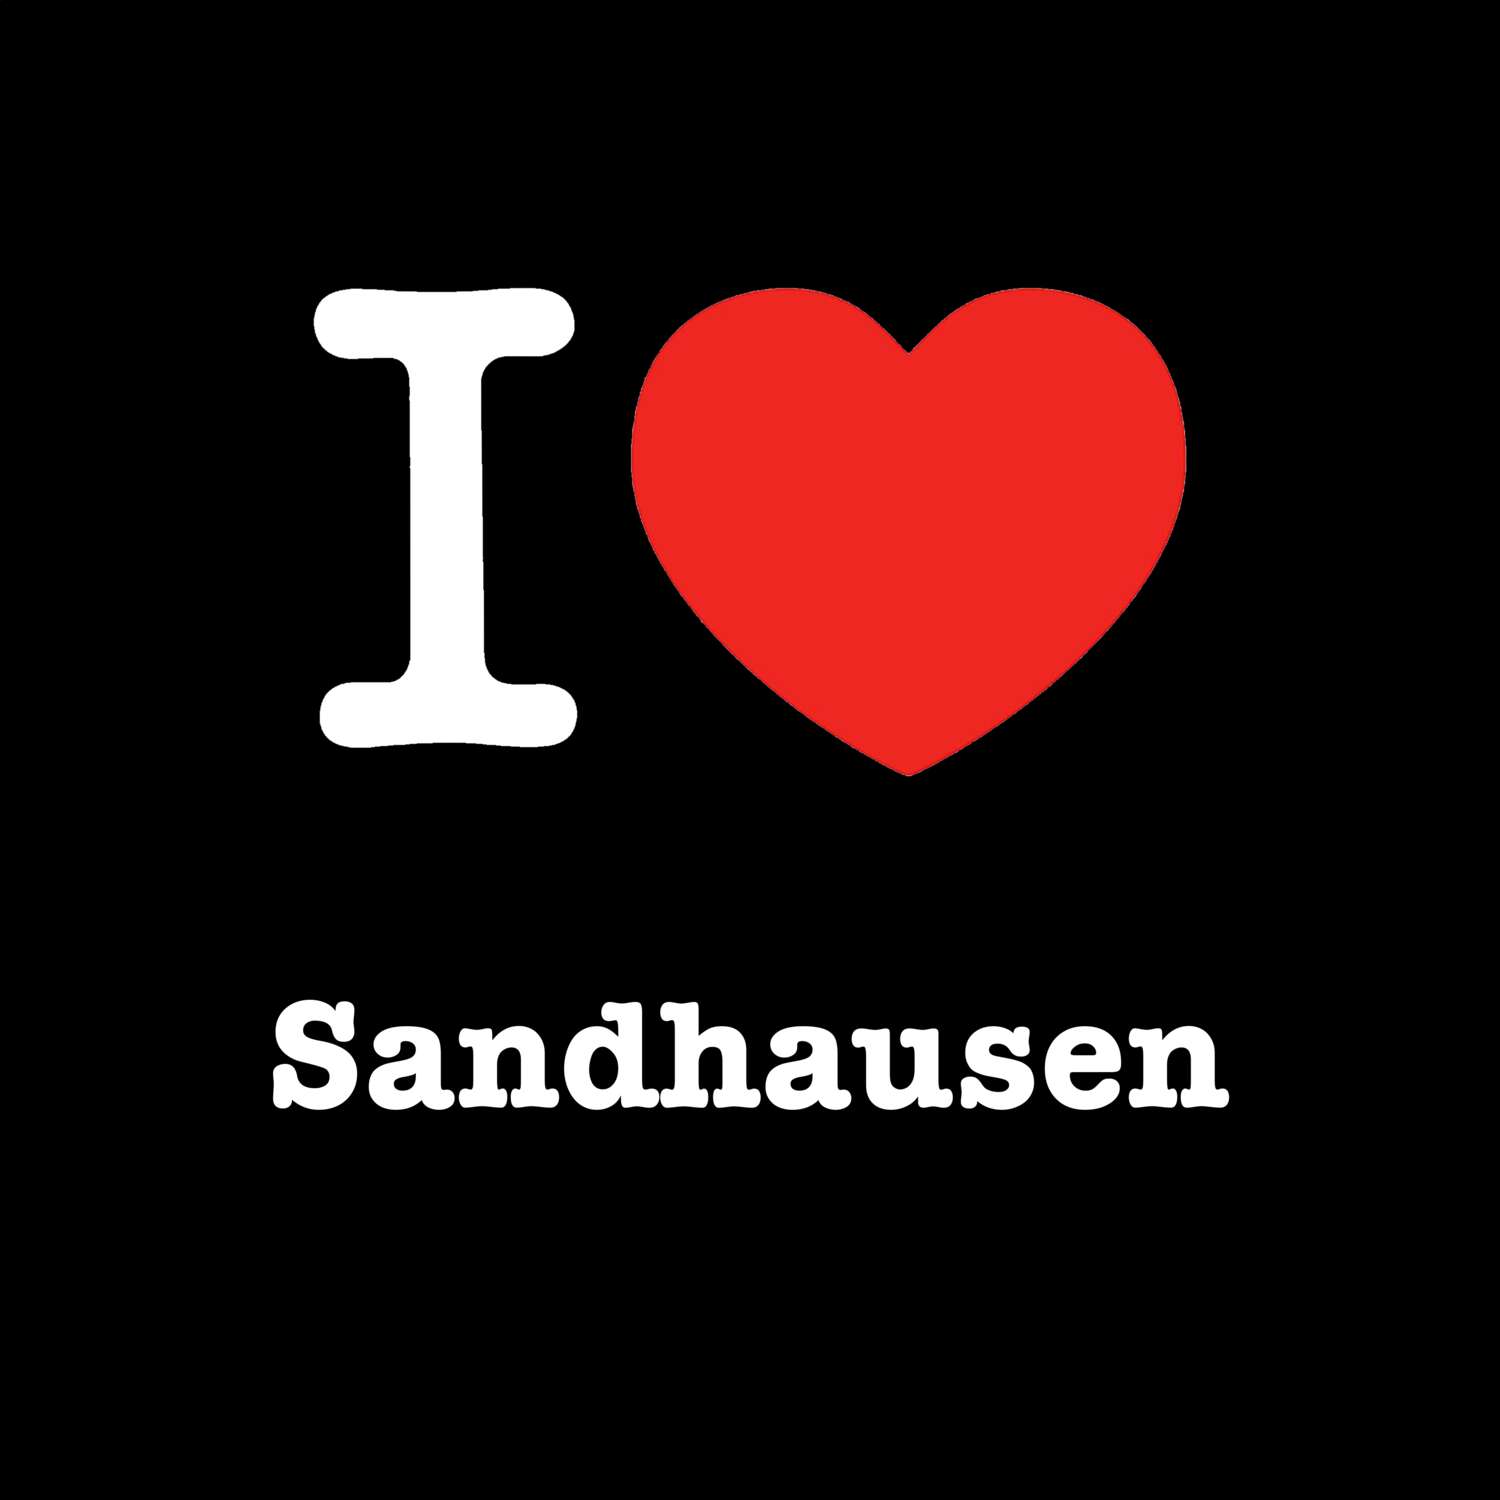 Sandhausen T-Shirt »I love«